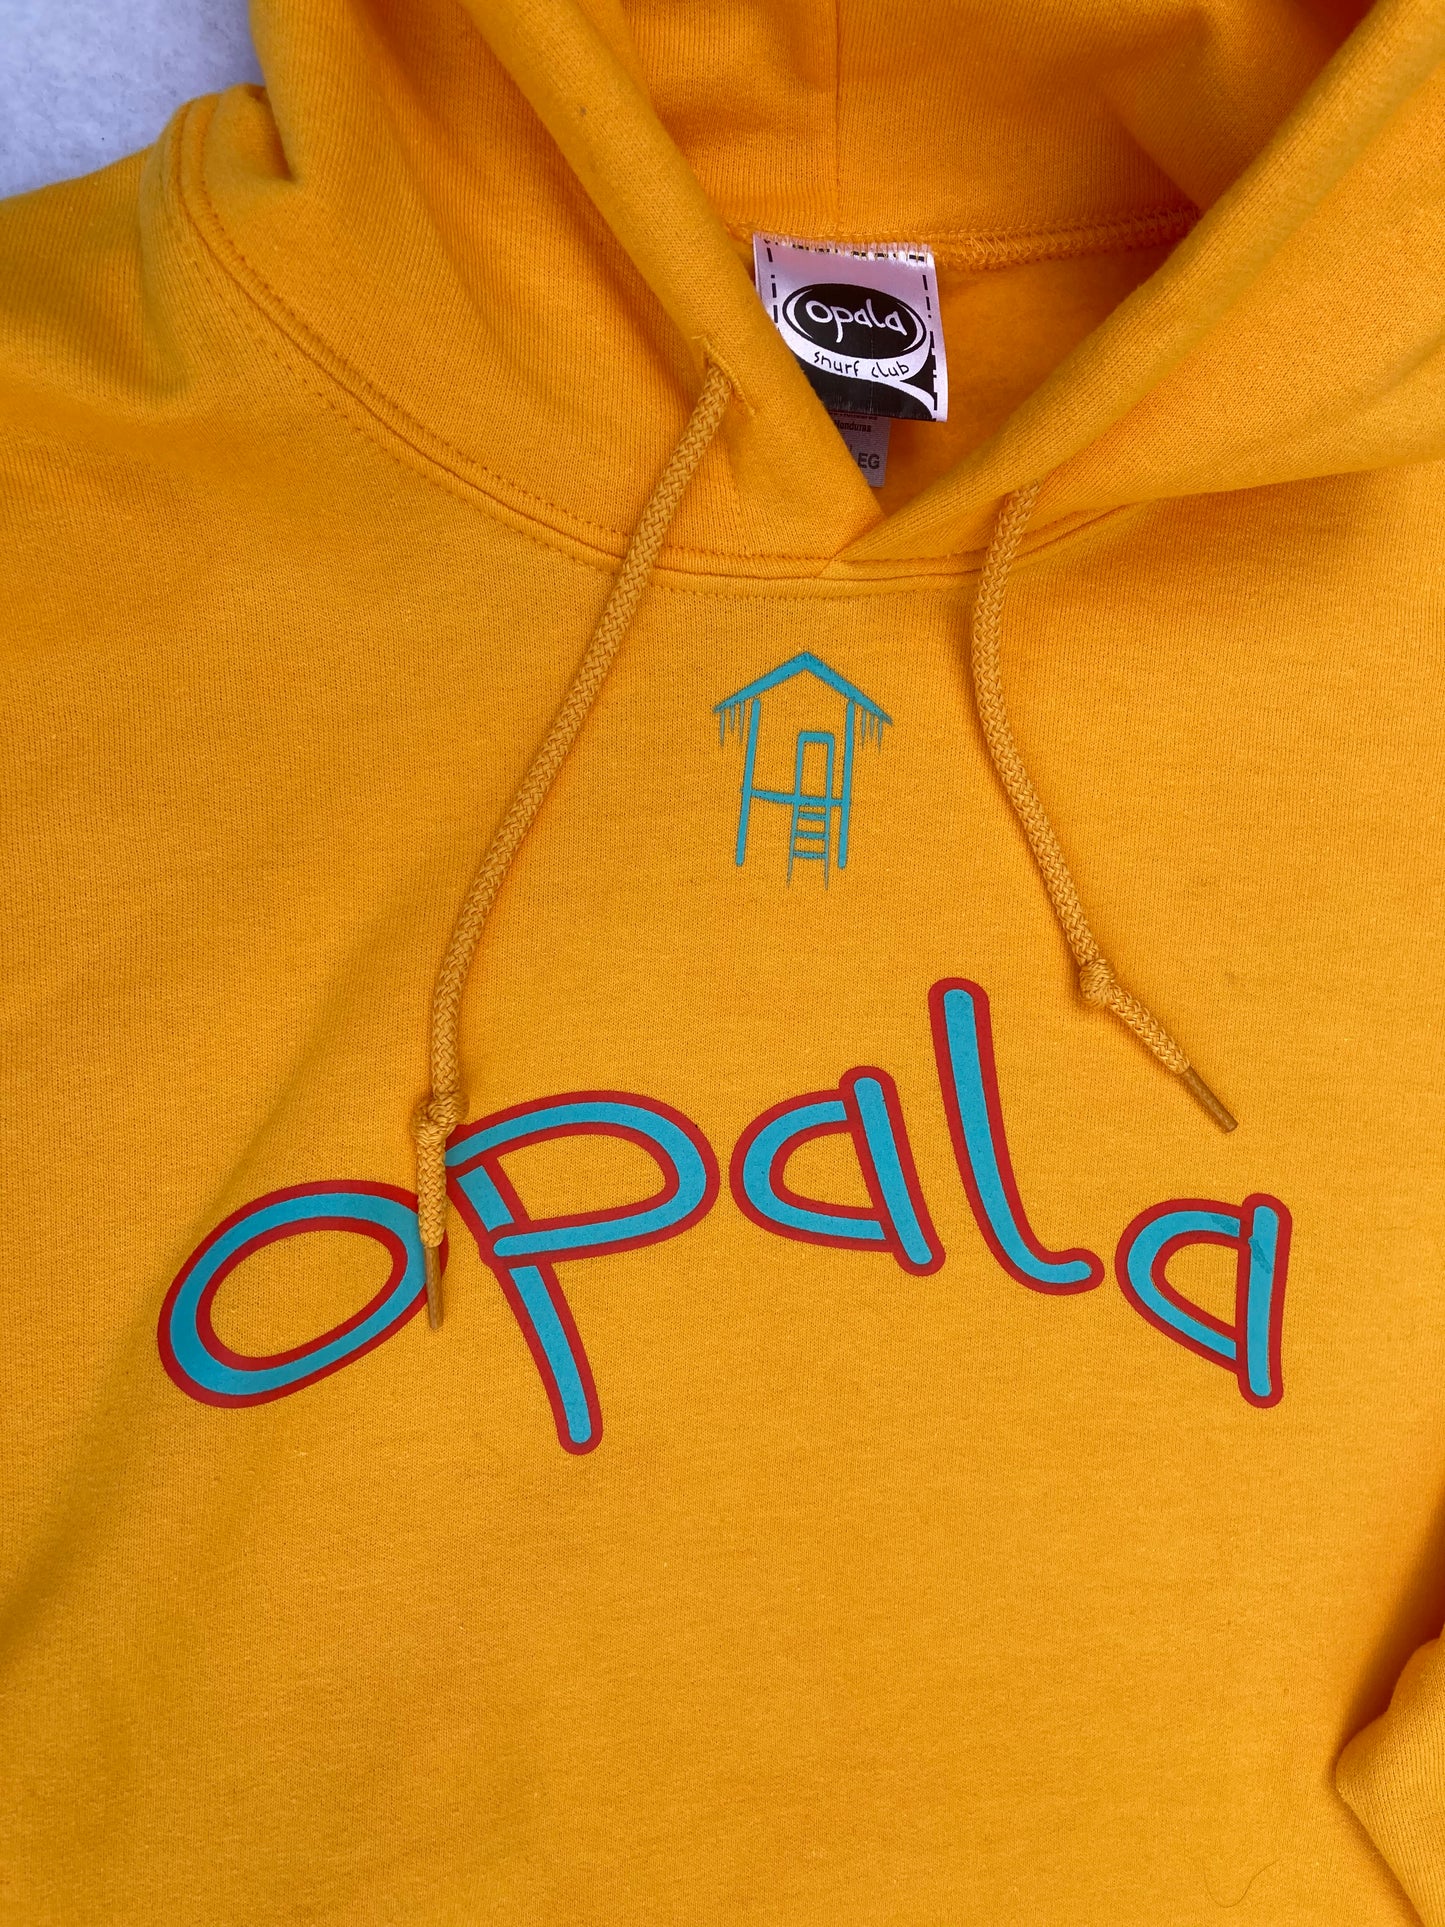 Opala Team Hood